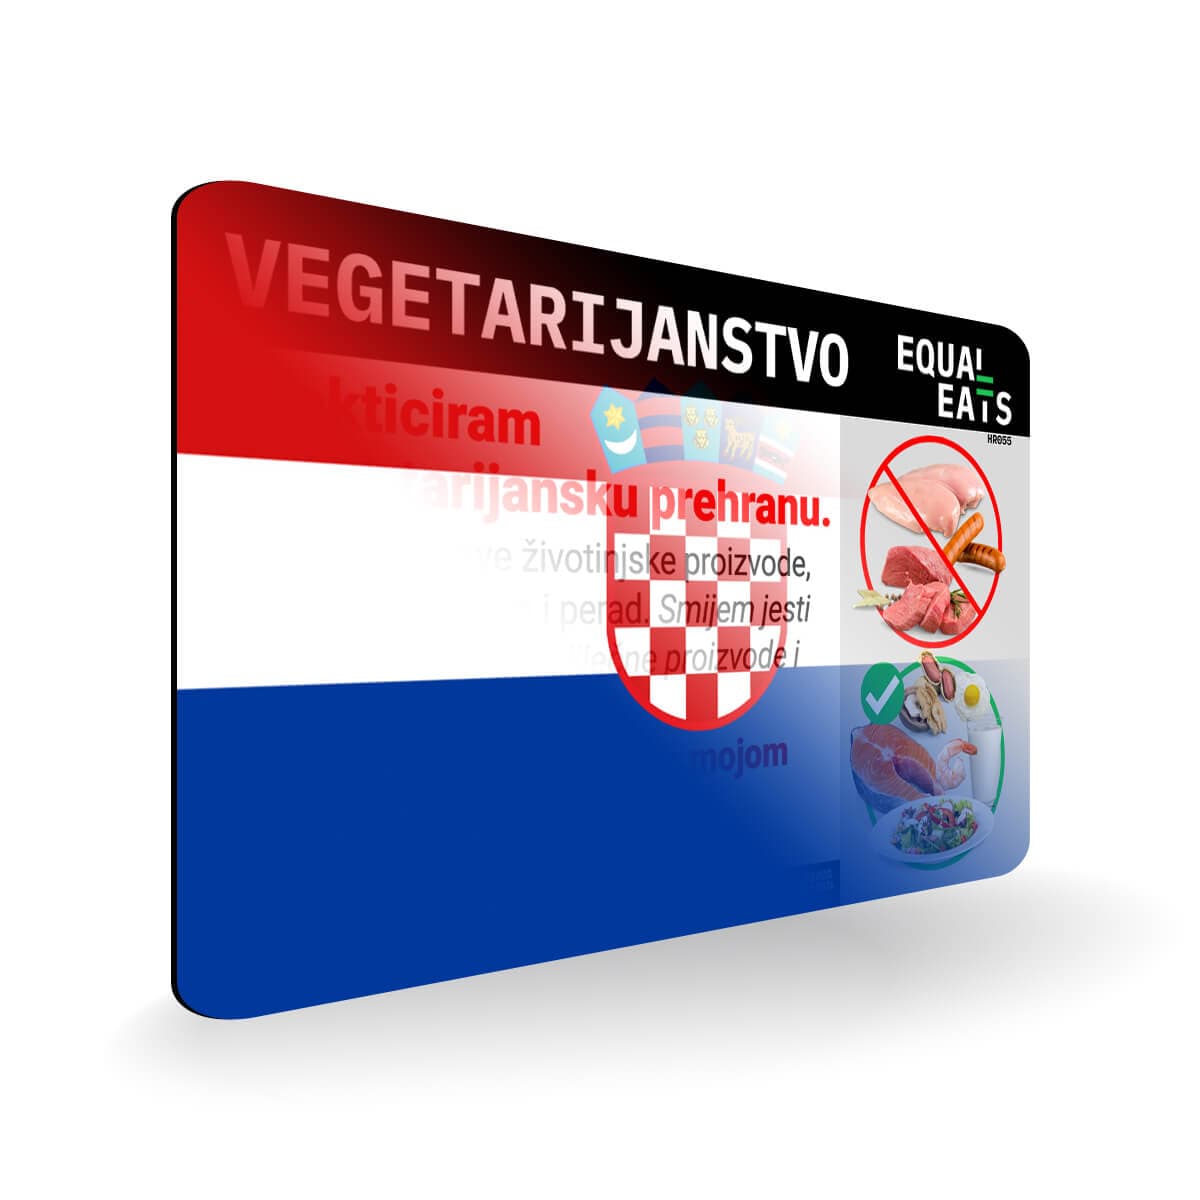 Pescatarian in Croatian. Pescatarian Diet Traveling in Croatia